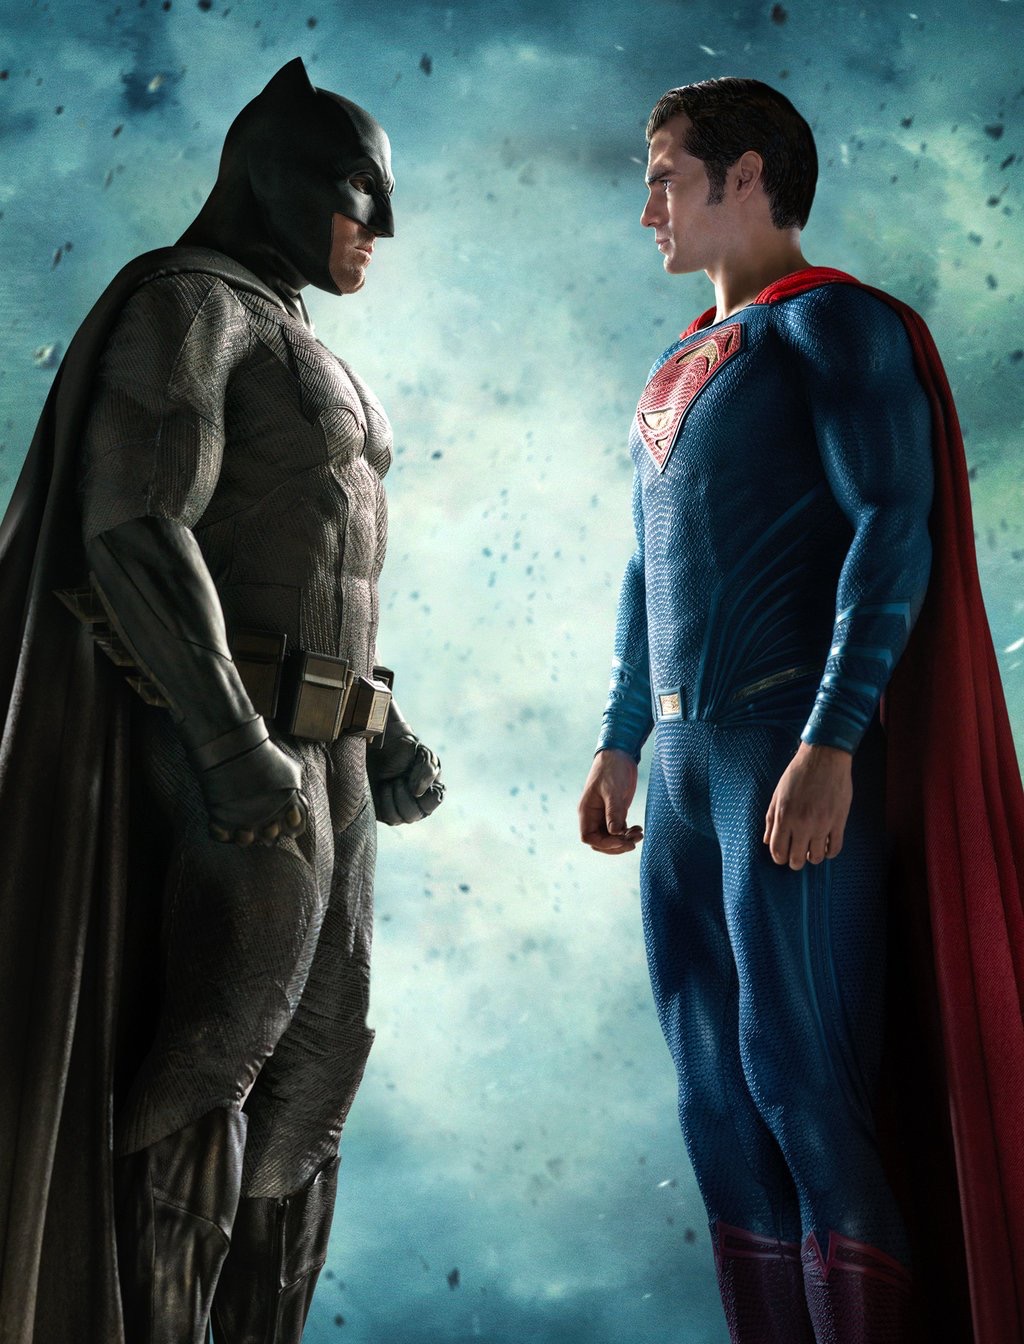 batman vs superman full movie